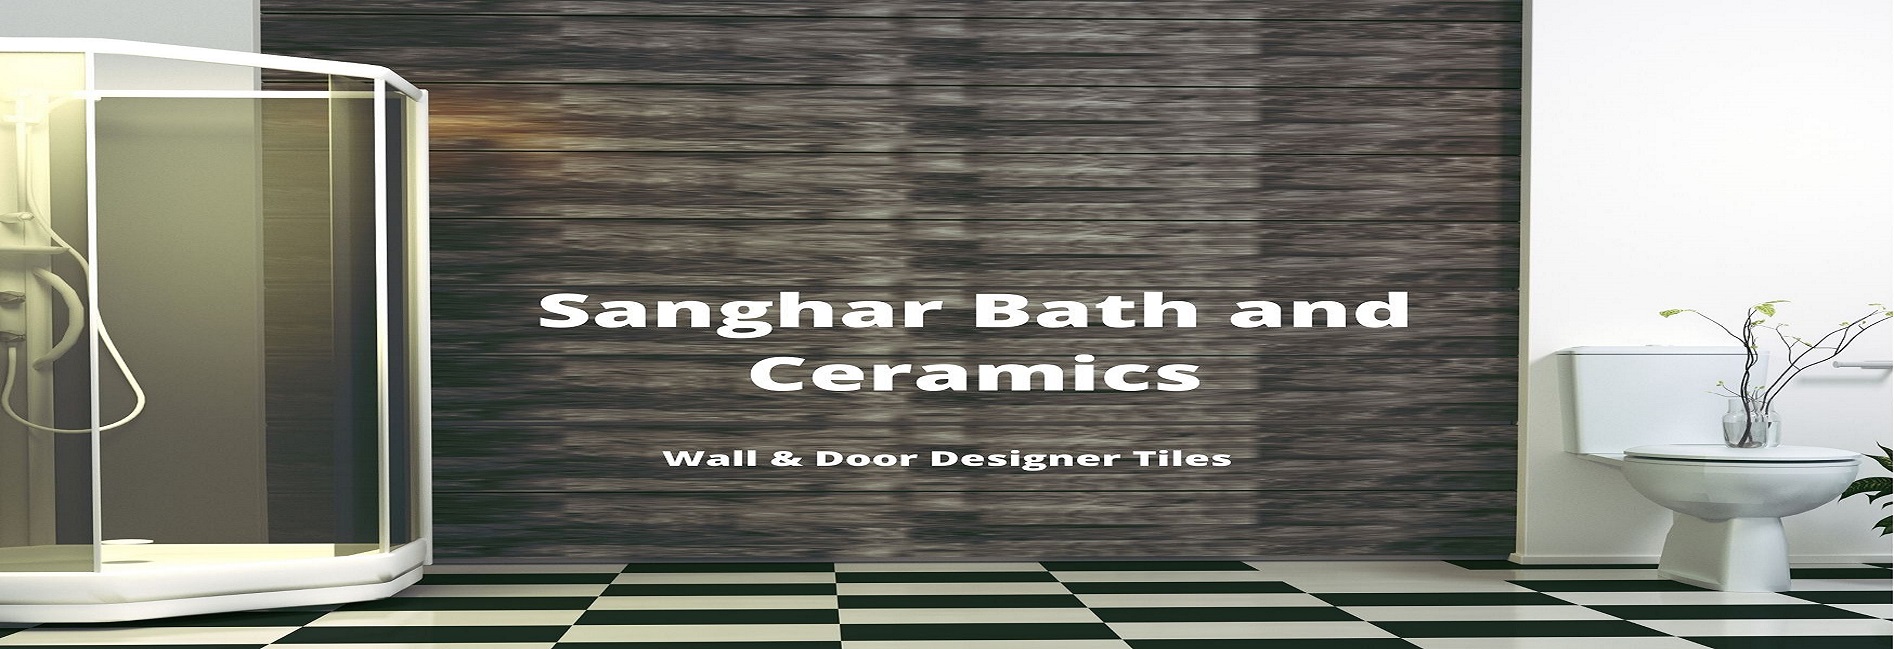 Sanghar Bath and Ceramics slider